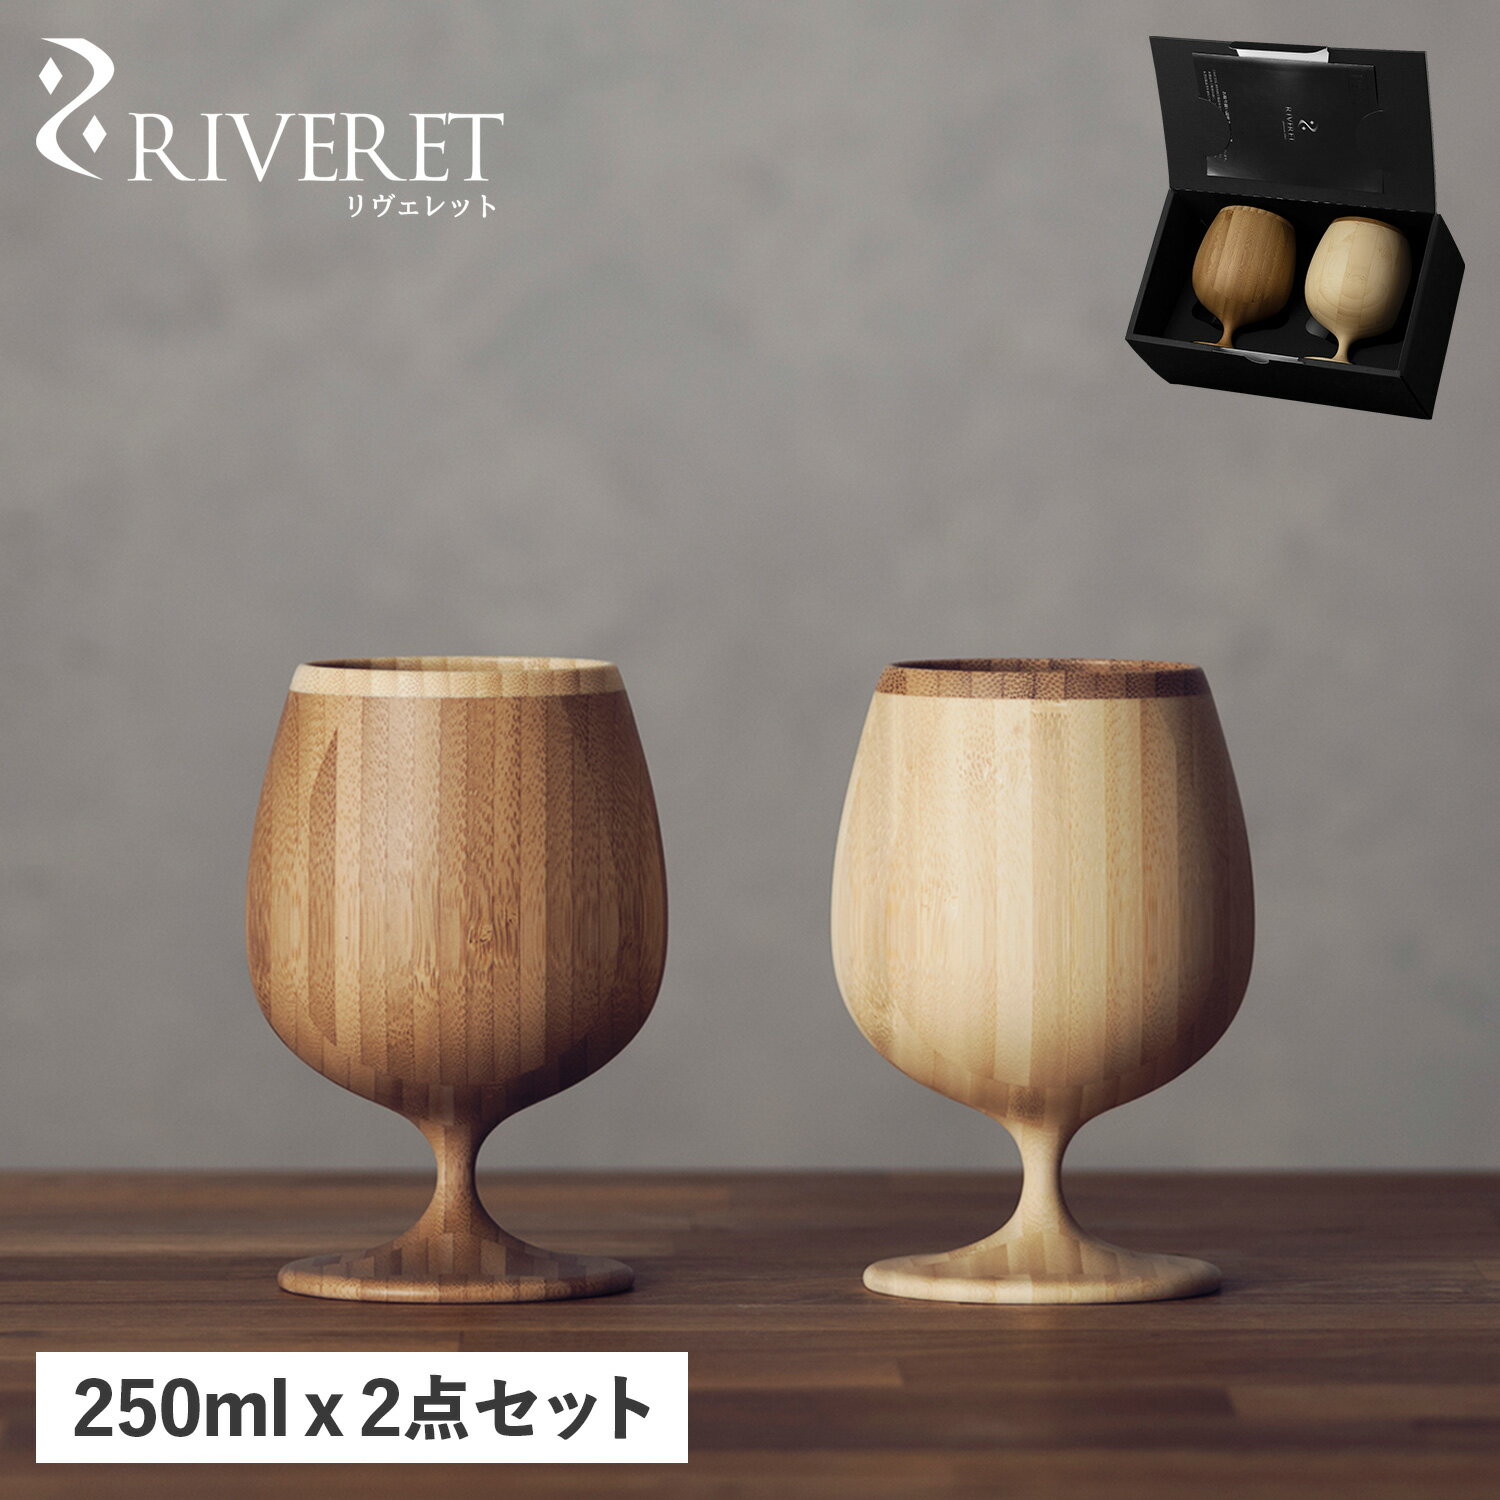 RIVERET リヴェレット グラス ブランデーグラス 2点セット ブランデーベッセル 天然素材 日本製 食洗器対応 リベレット BRANDY VESSEL PAIR RV-117WB 母の日